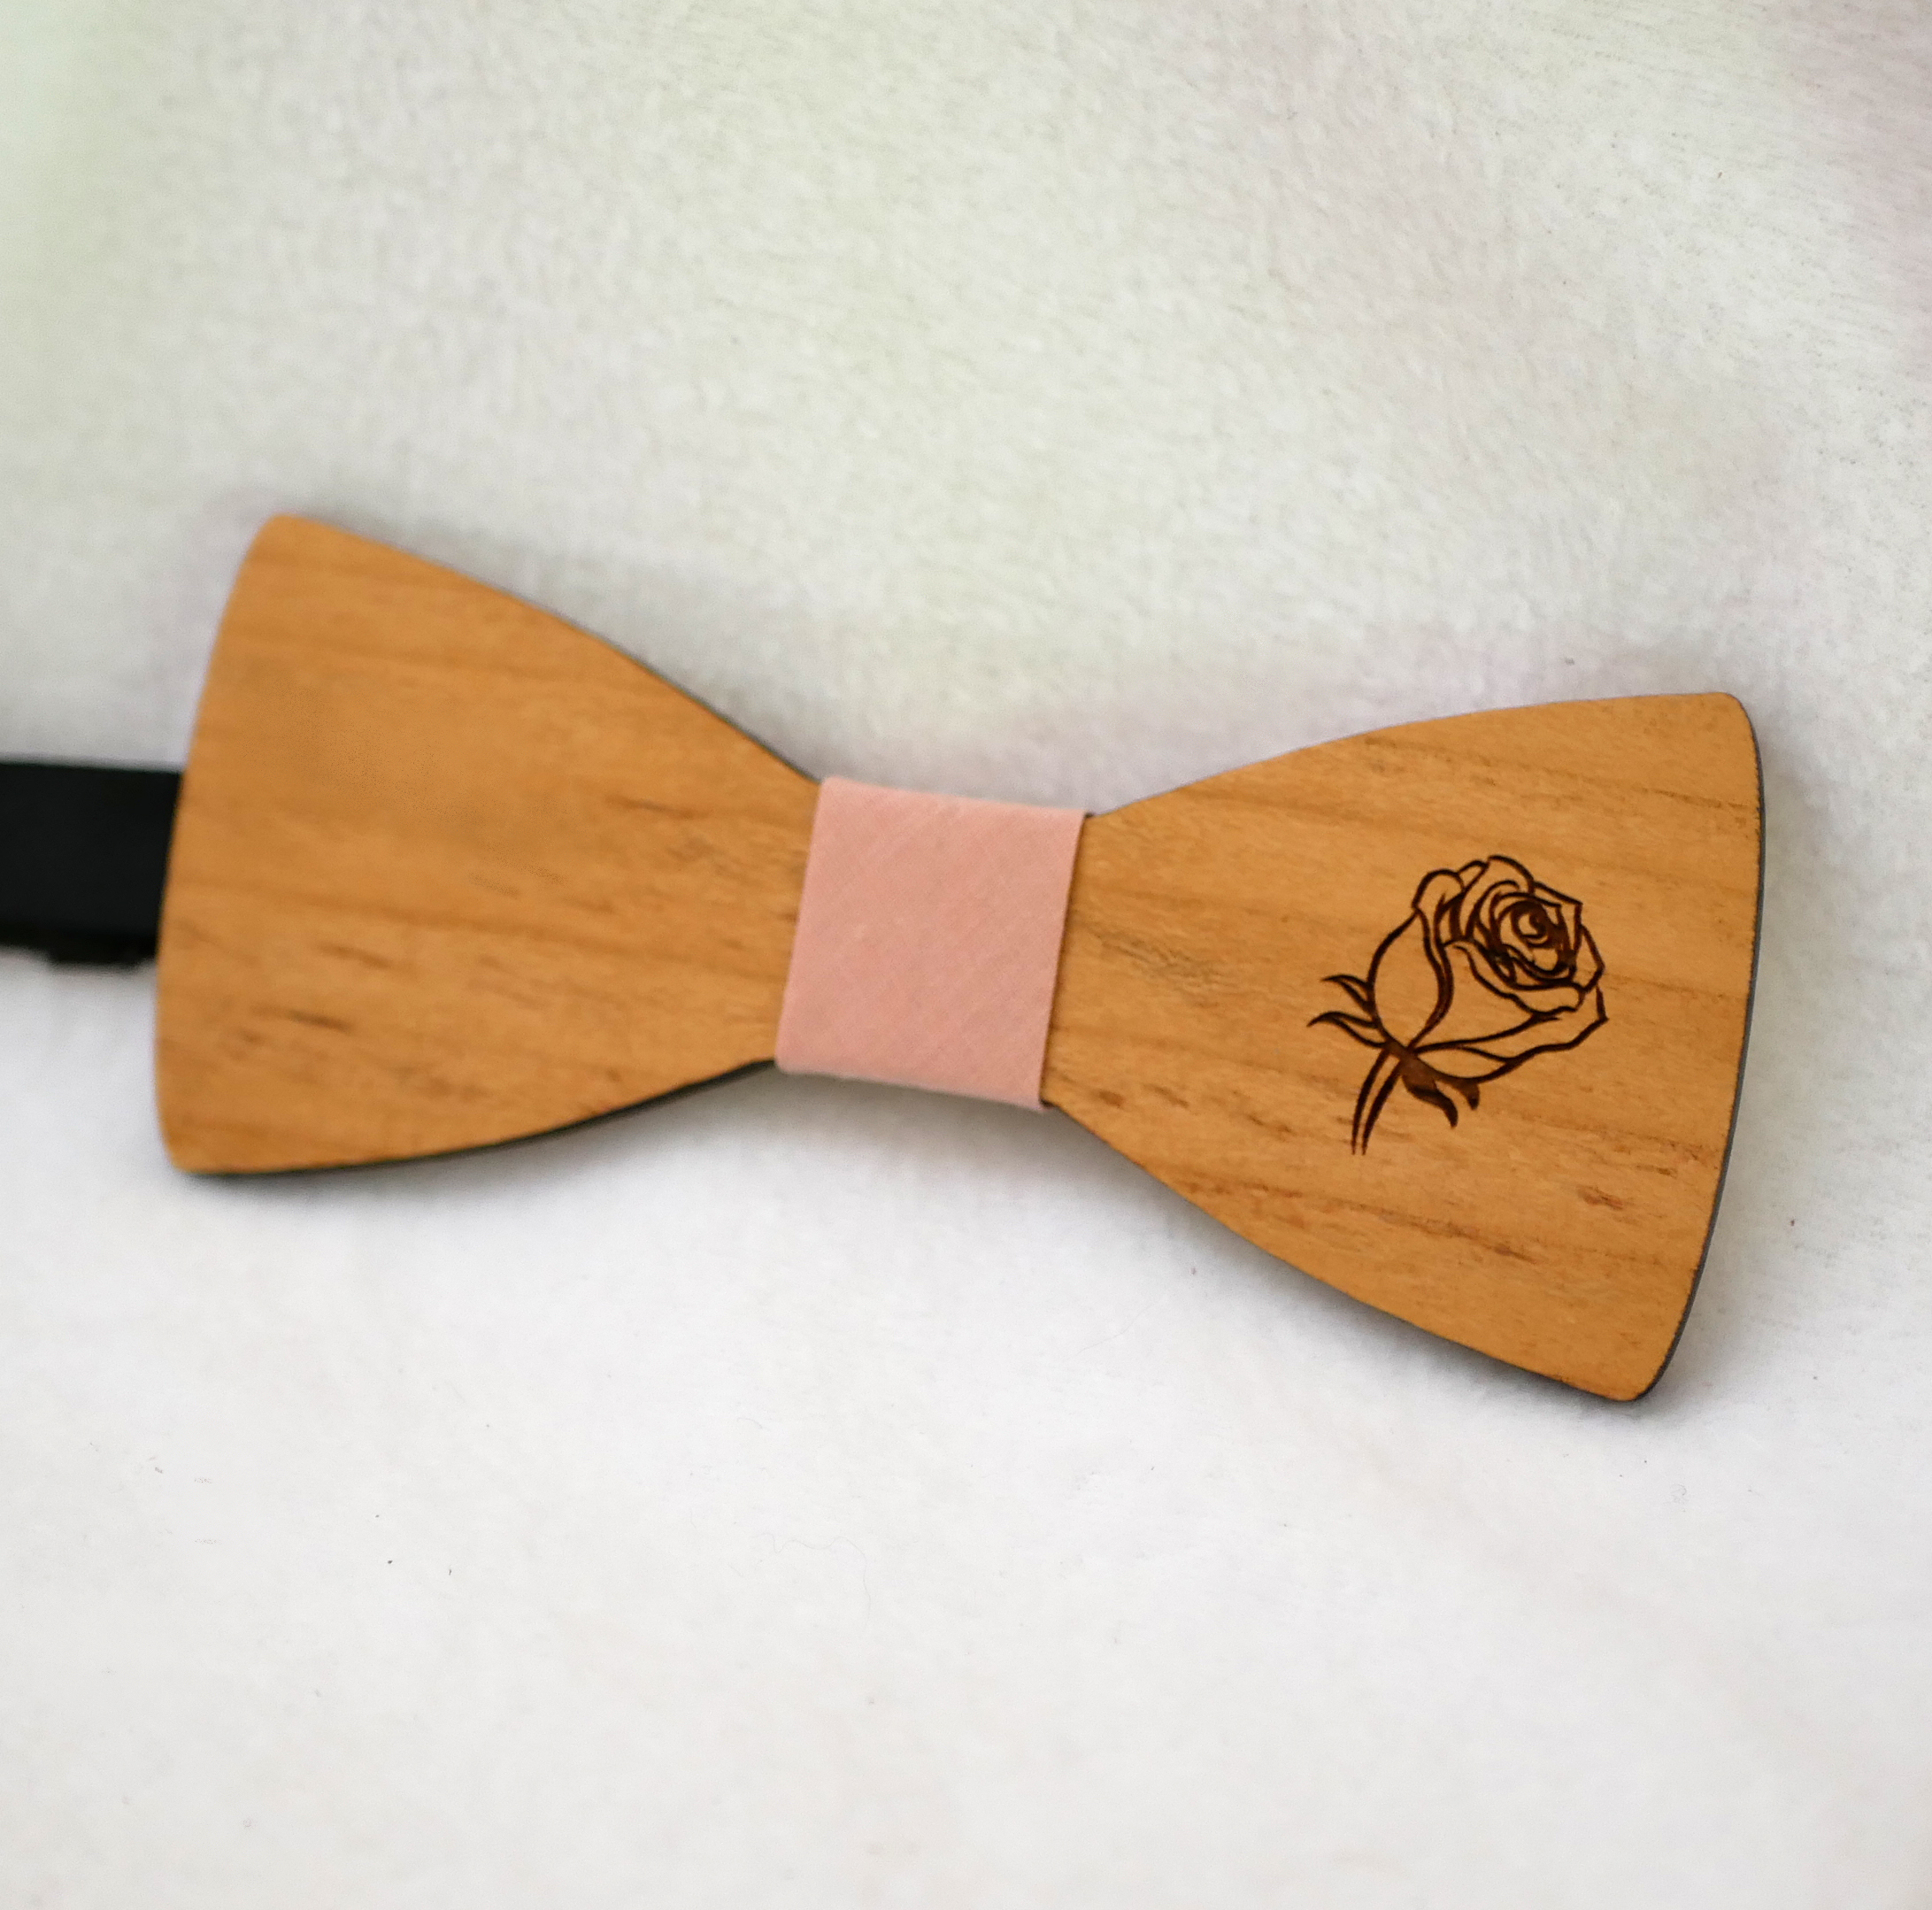 Diseño de una rosa grabada en una pajarita